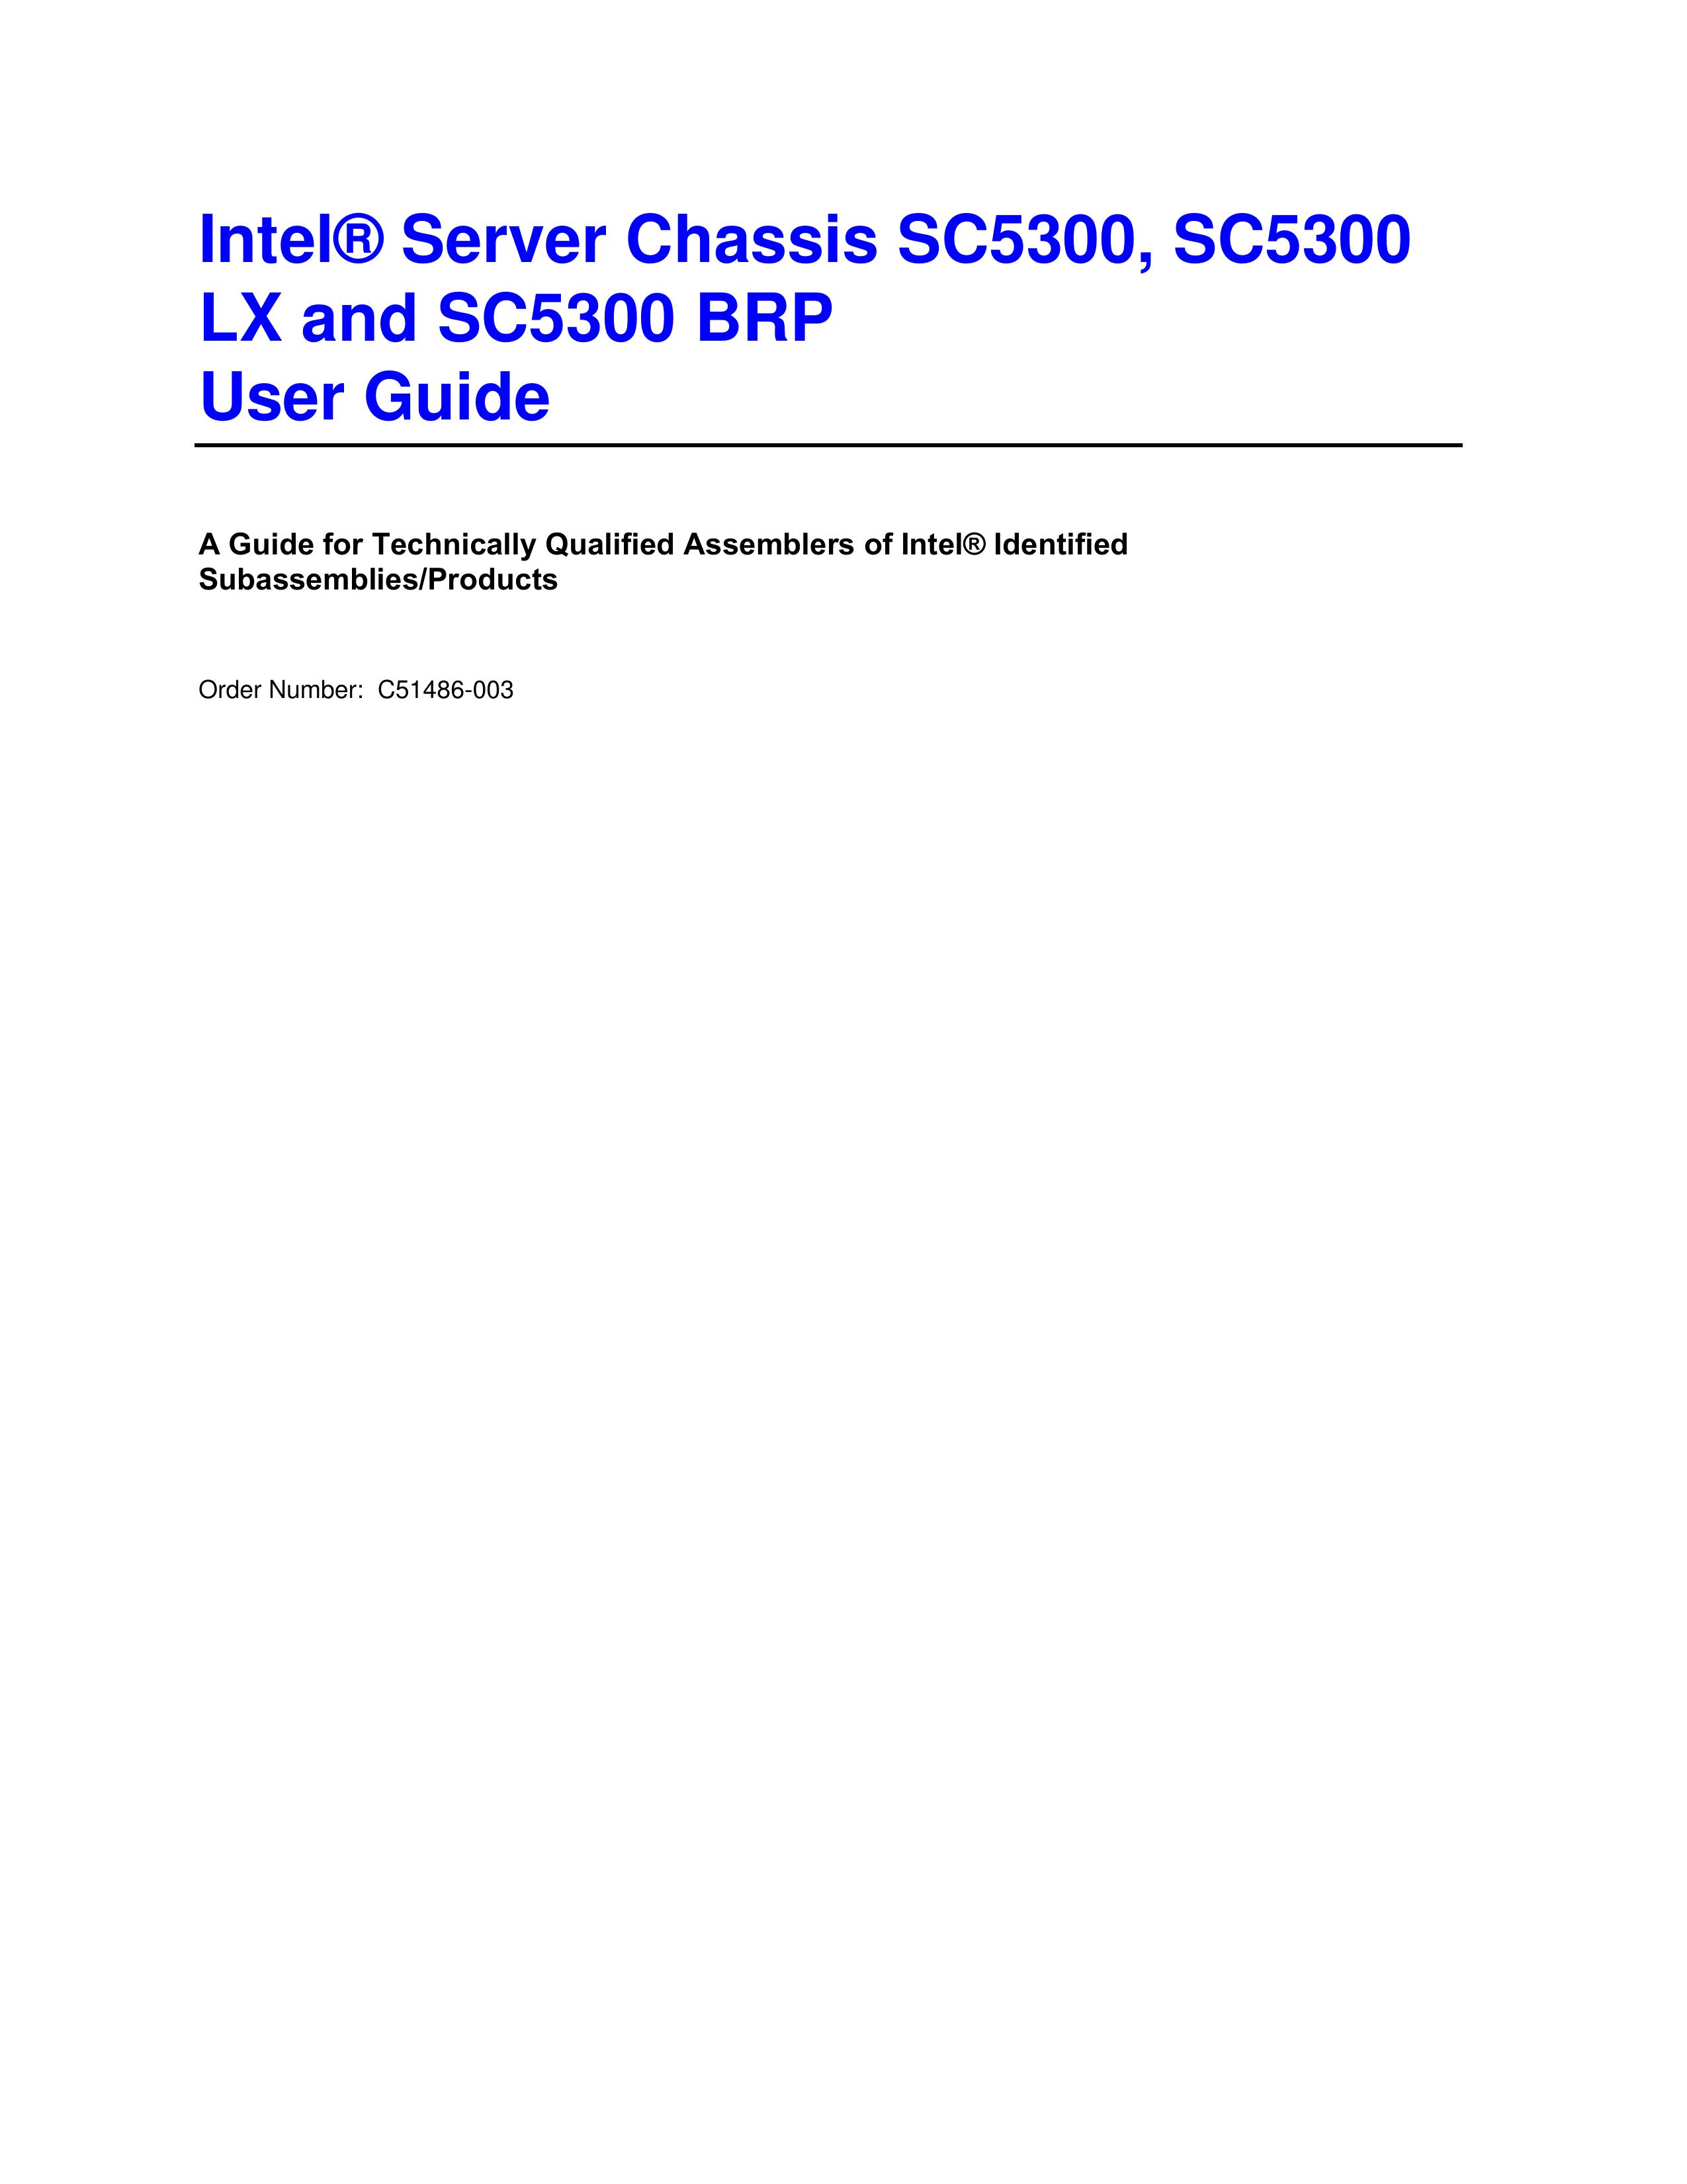 Intel SC5300 BRP Life Jacket User Manual